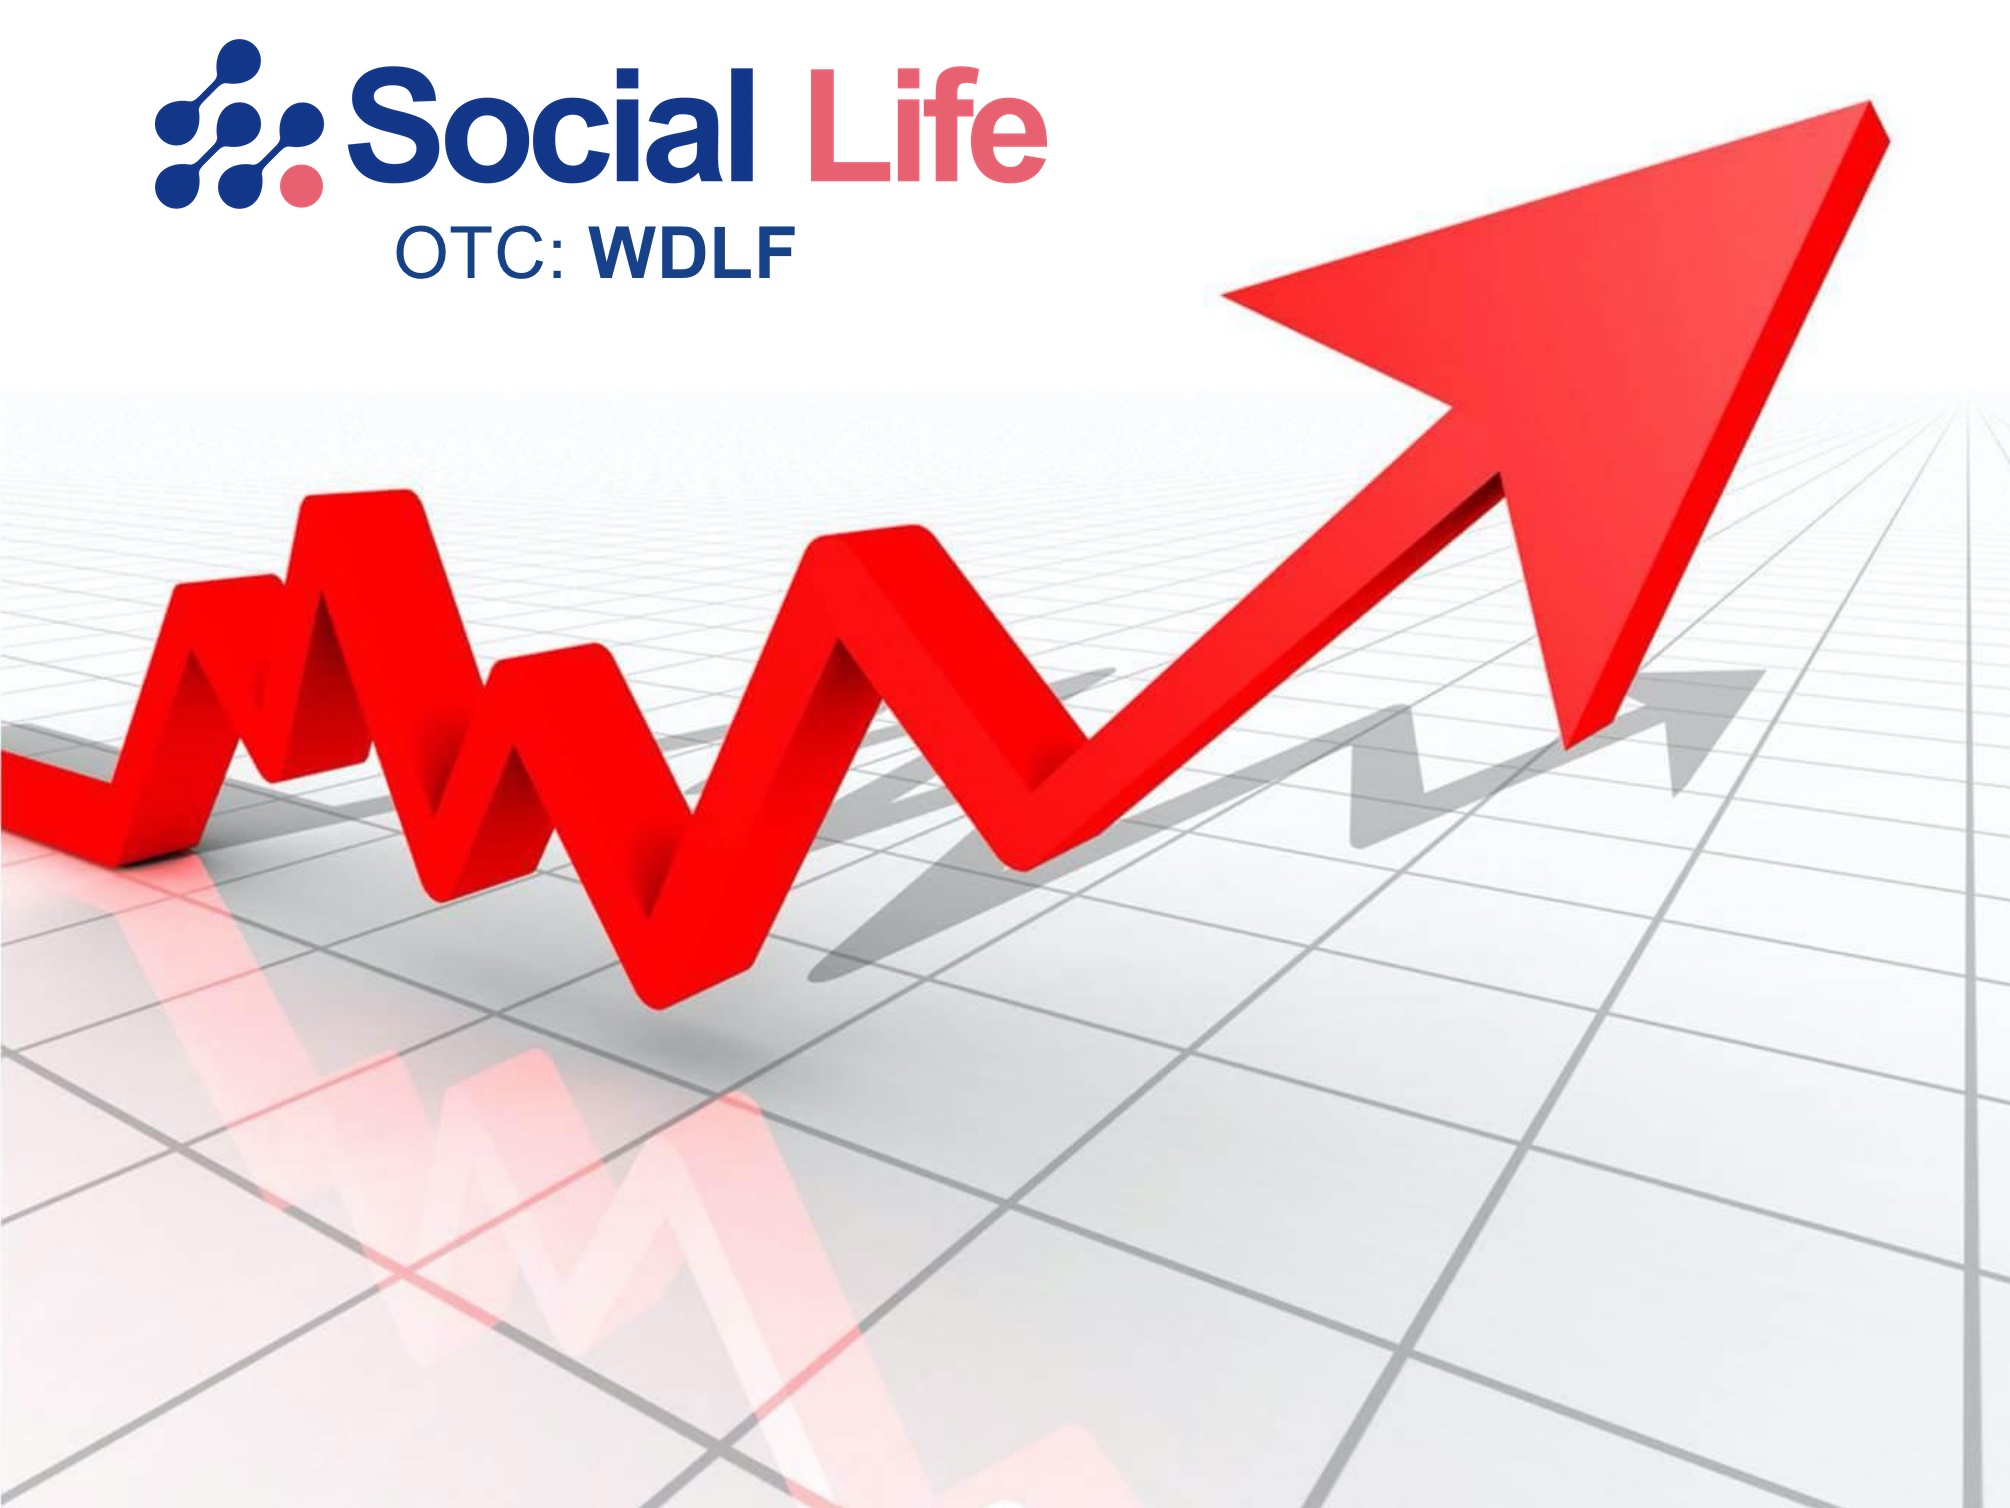 Social Life Network - OTC: WDLF - Update Press Release